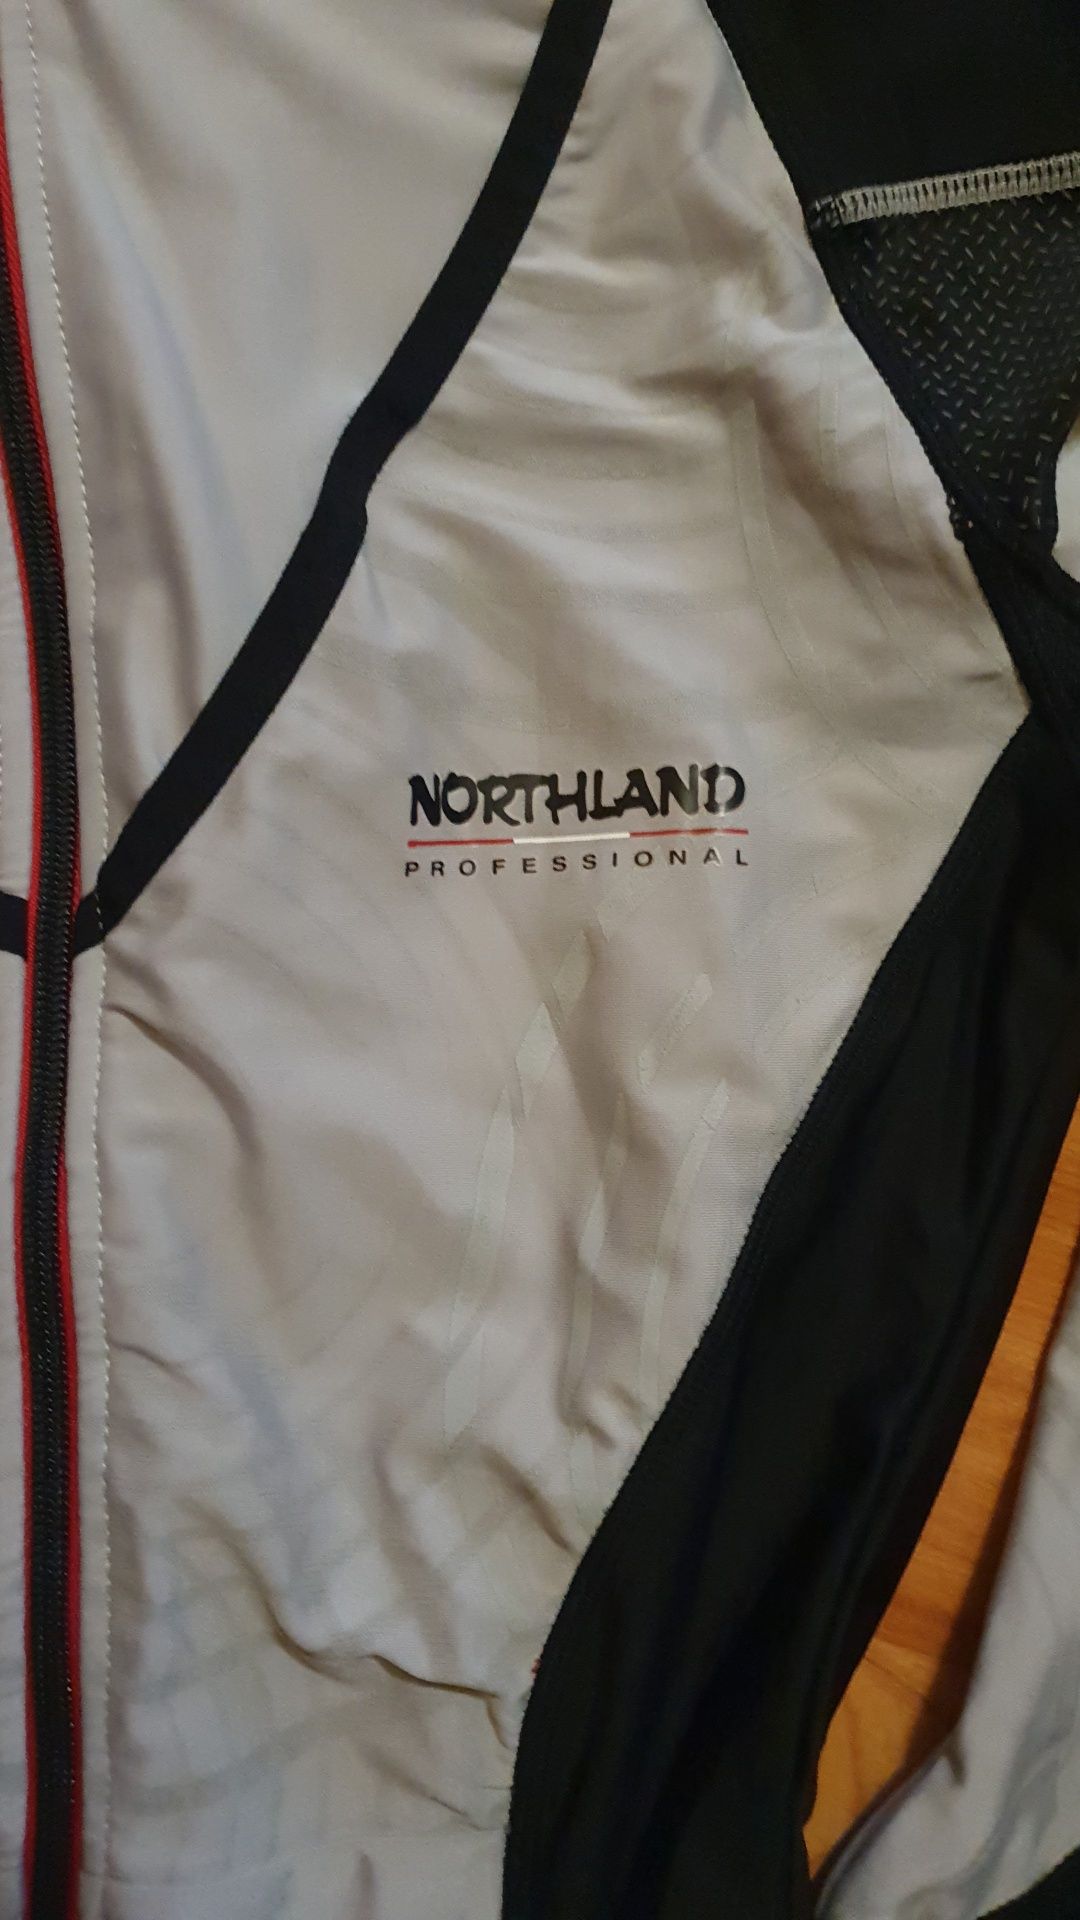 De vânzare Northland Profesional termic